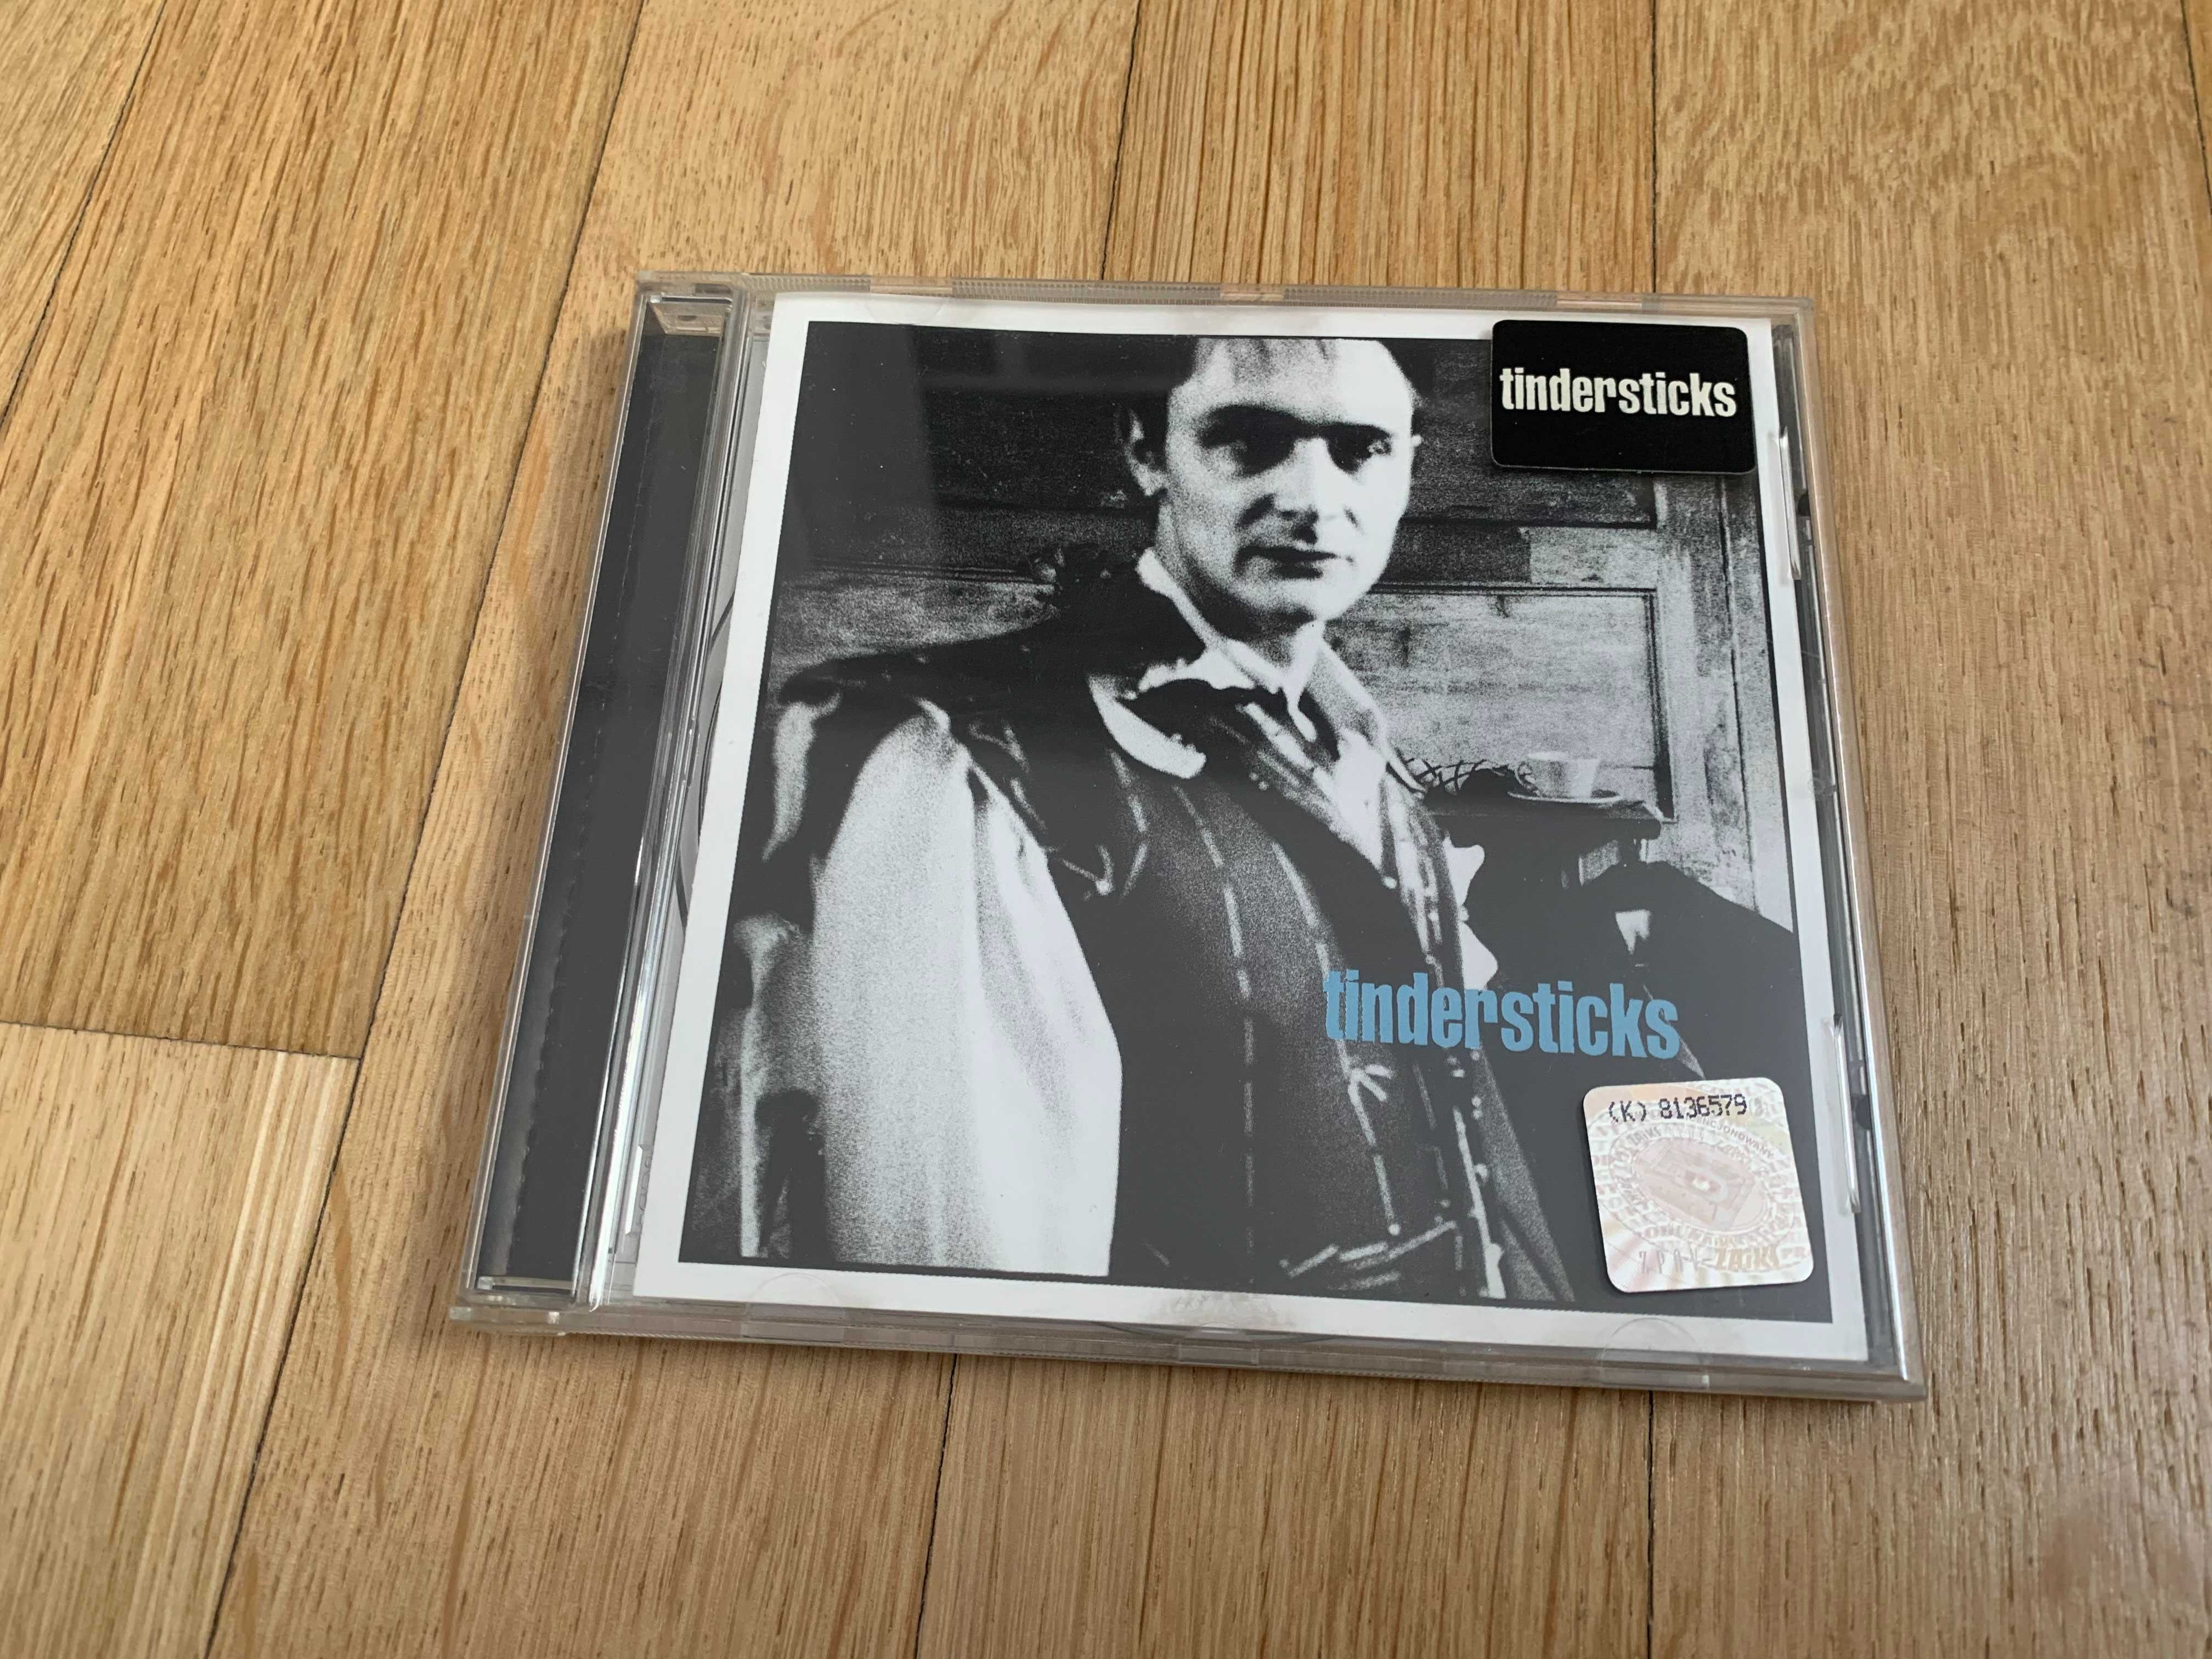 TINDERSTICKS - Tindersticks (2nd album) - CD